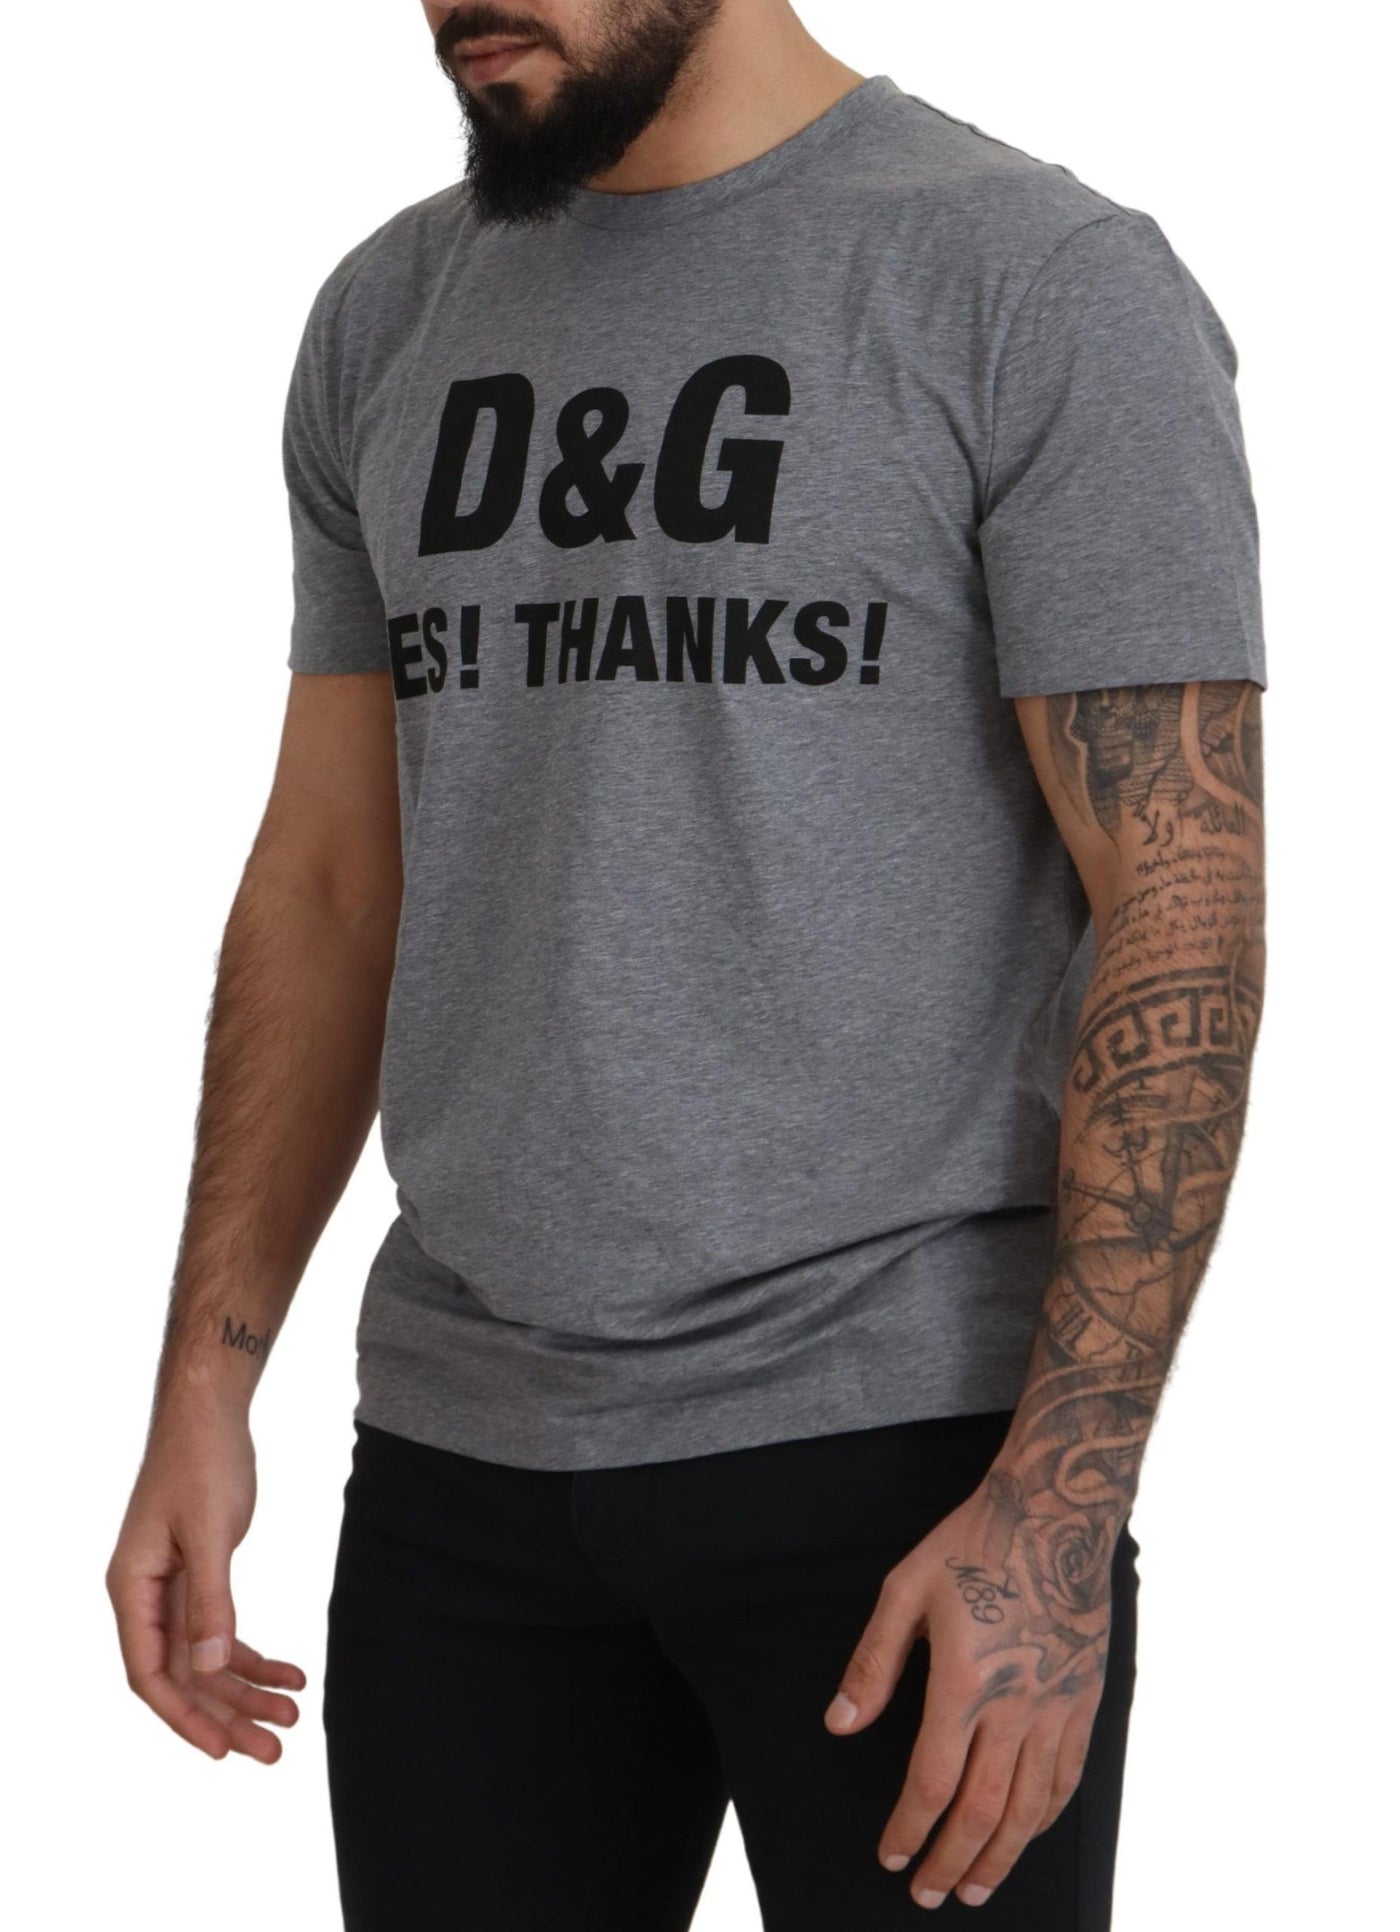 Gray D&G YES! THANKS! Crewneck Cotton  T-shirt